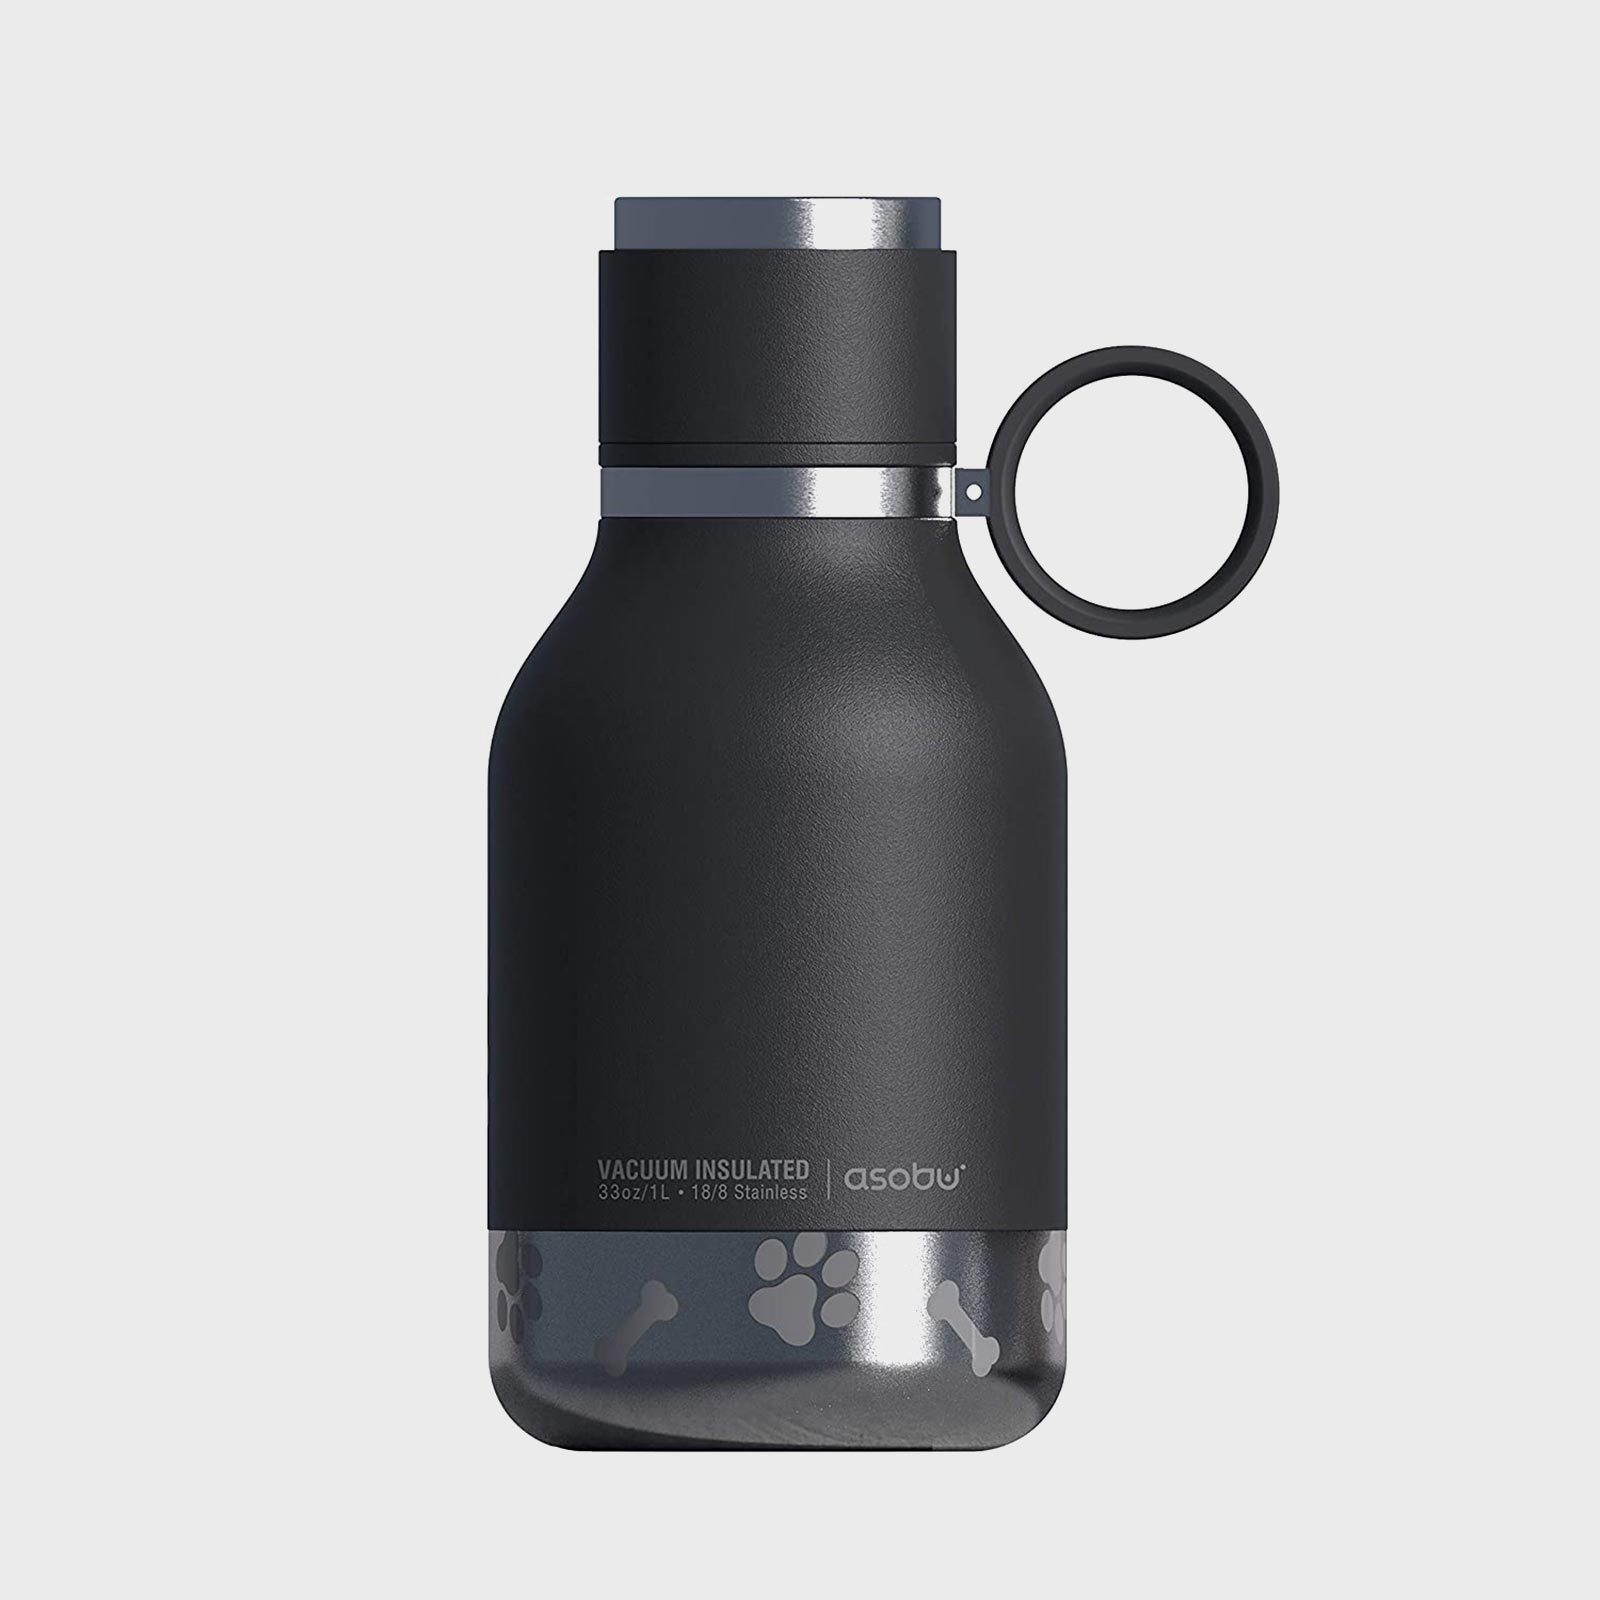 Portable Dog Water Bottle with feeder - Duggido